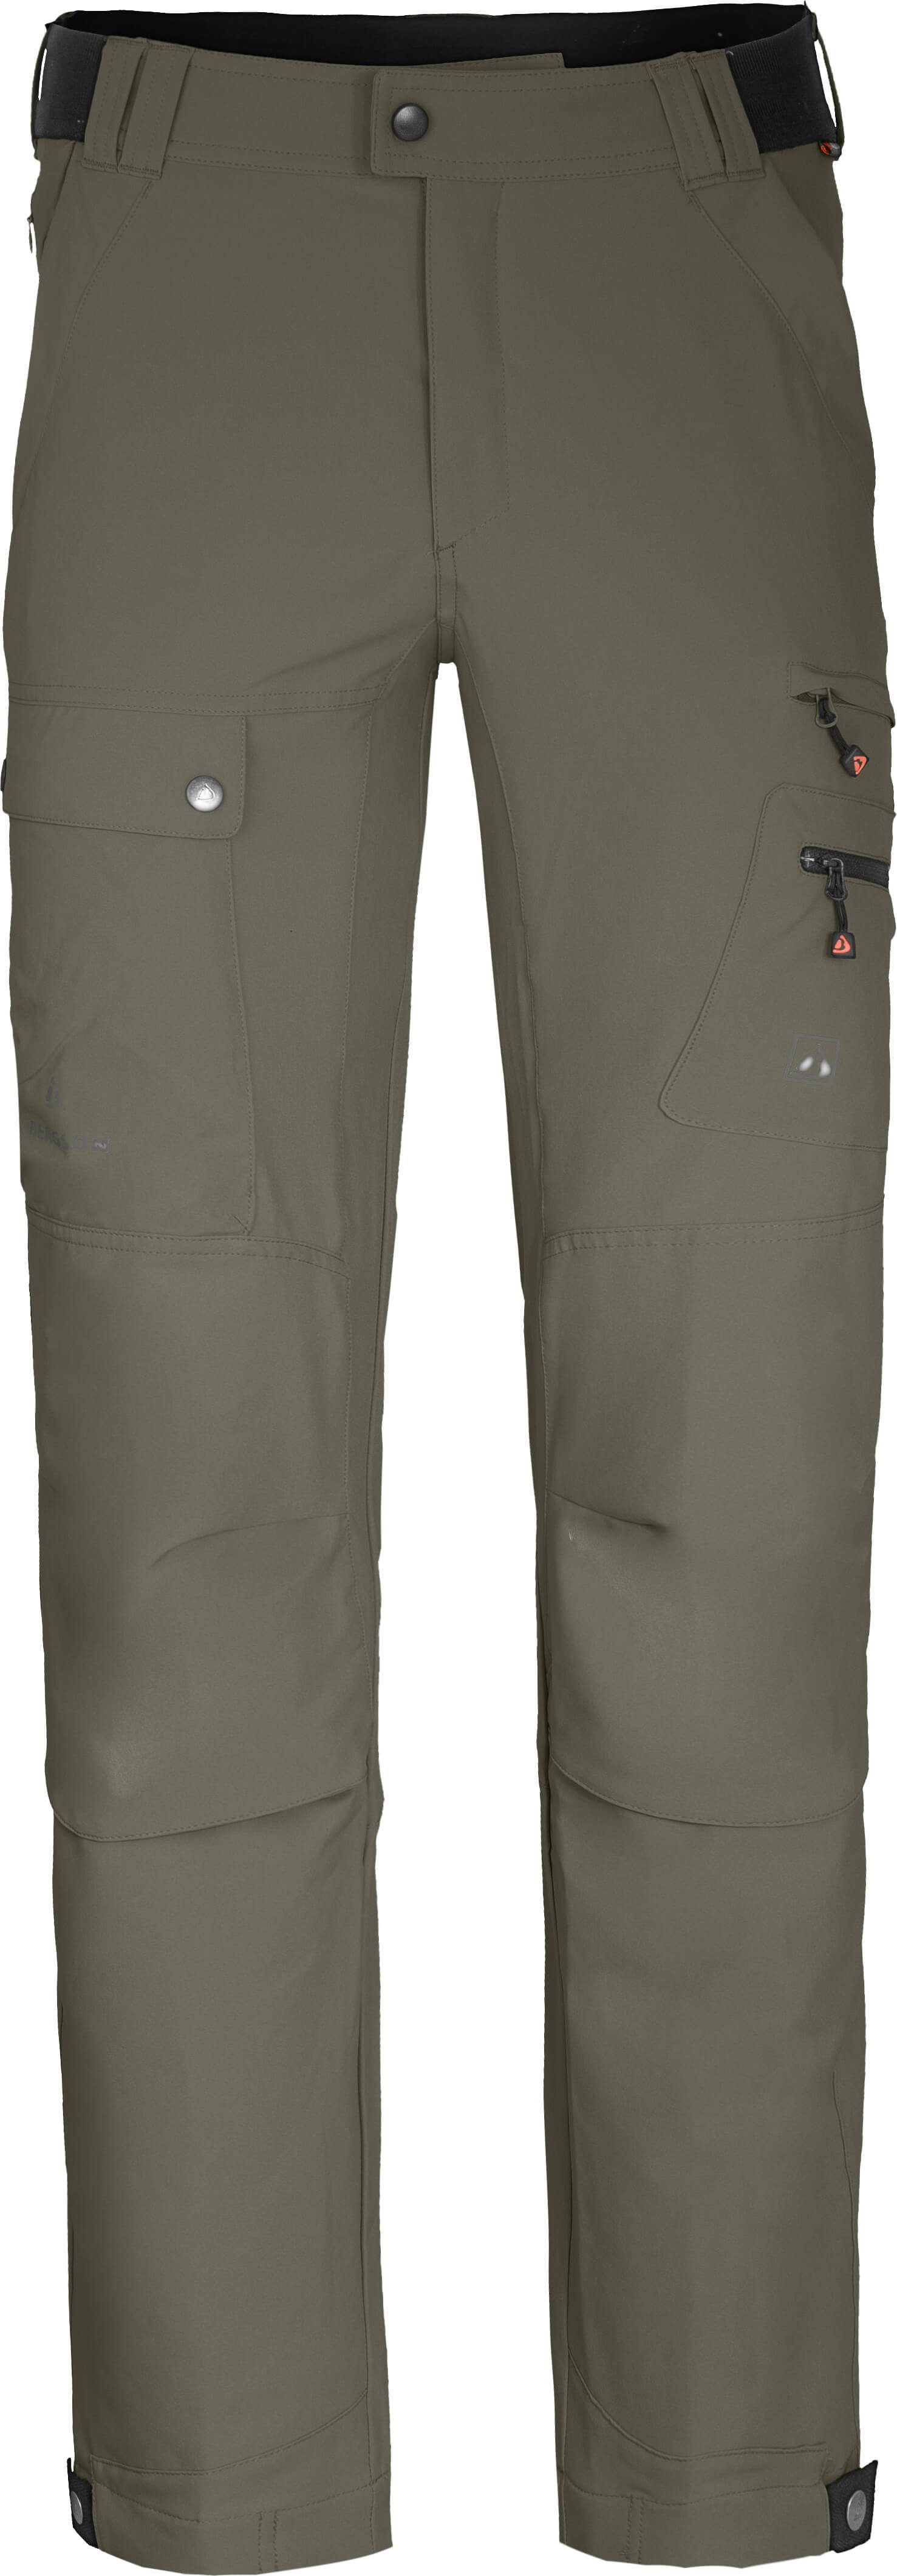 Bergson Outdoorhose FROSLEV COMFORT Herren Wanderhose, recycelt, elastisch, 8 Taschen, Normalgrößen, grau/grün